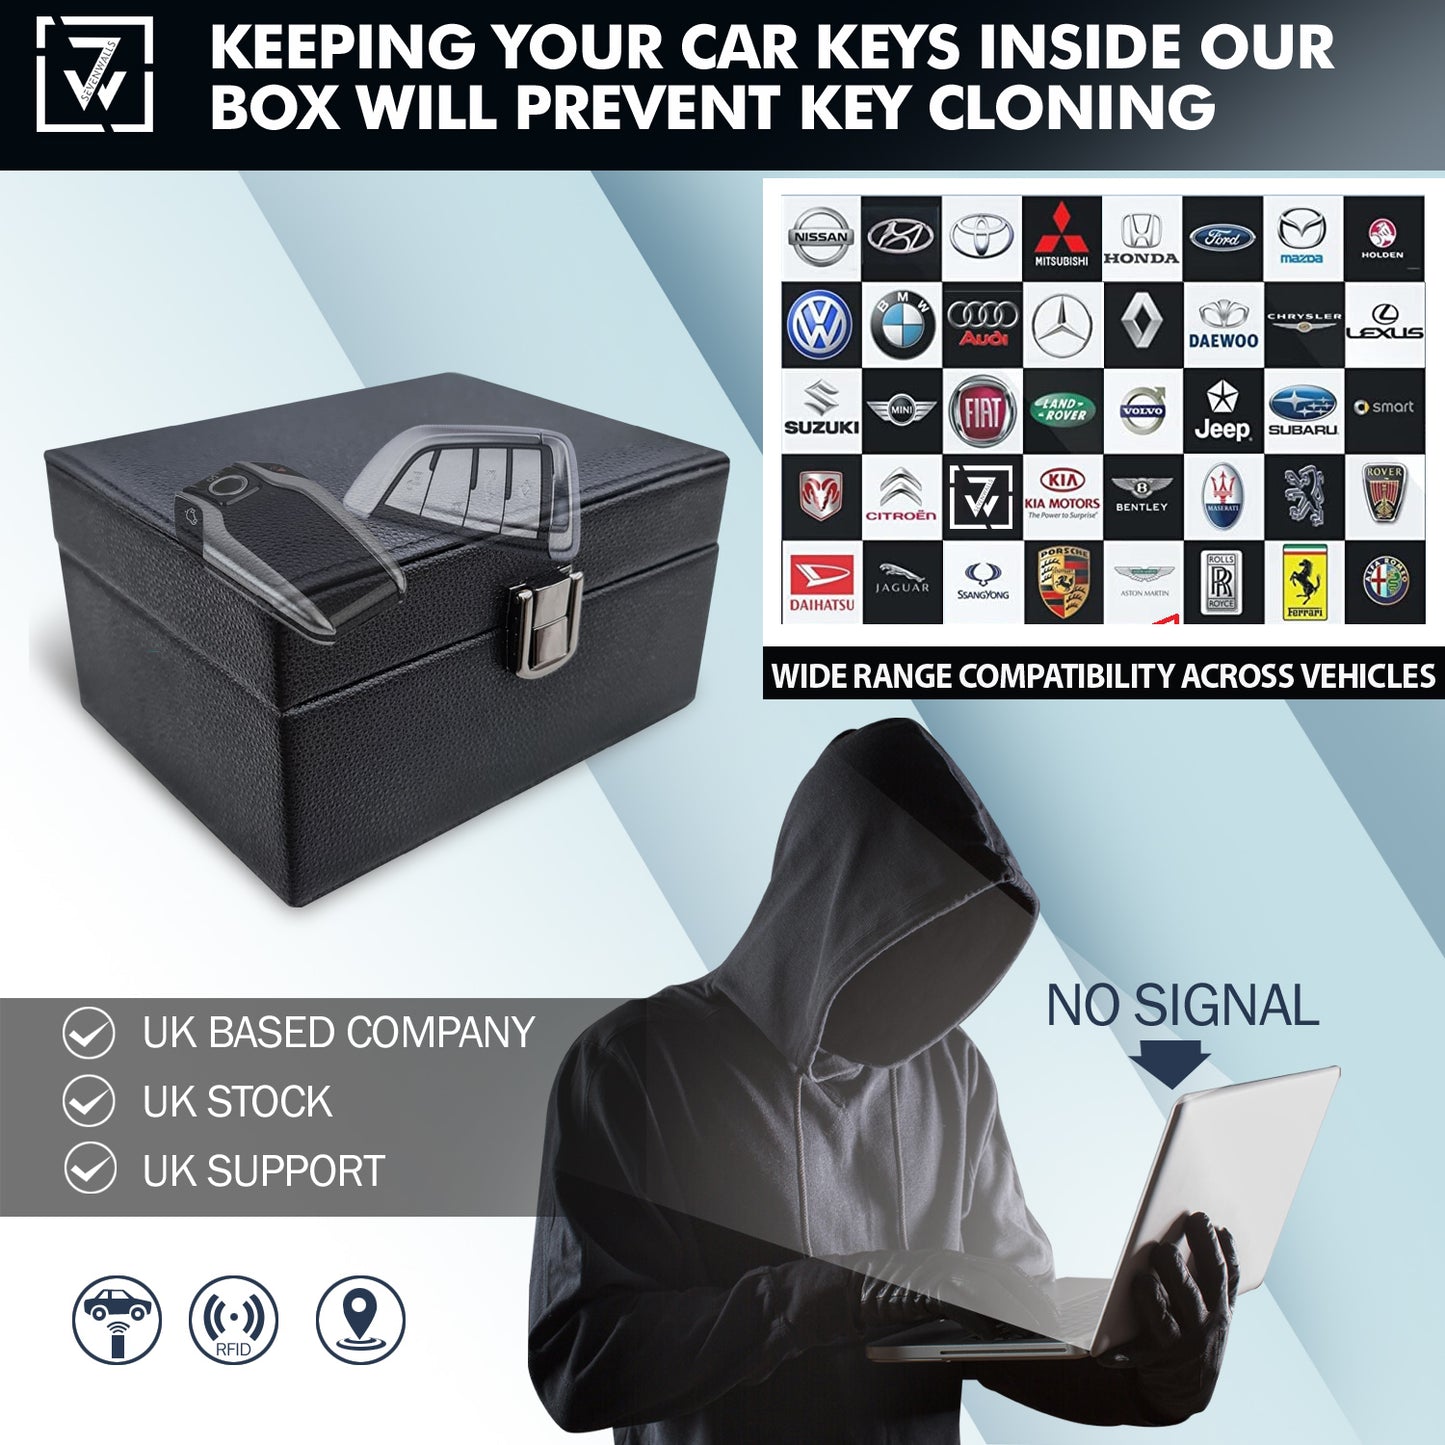 Secure Your Car with a Fashionable Faraday Key Signal Blocking Box